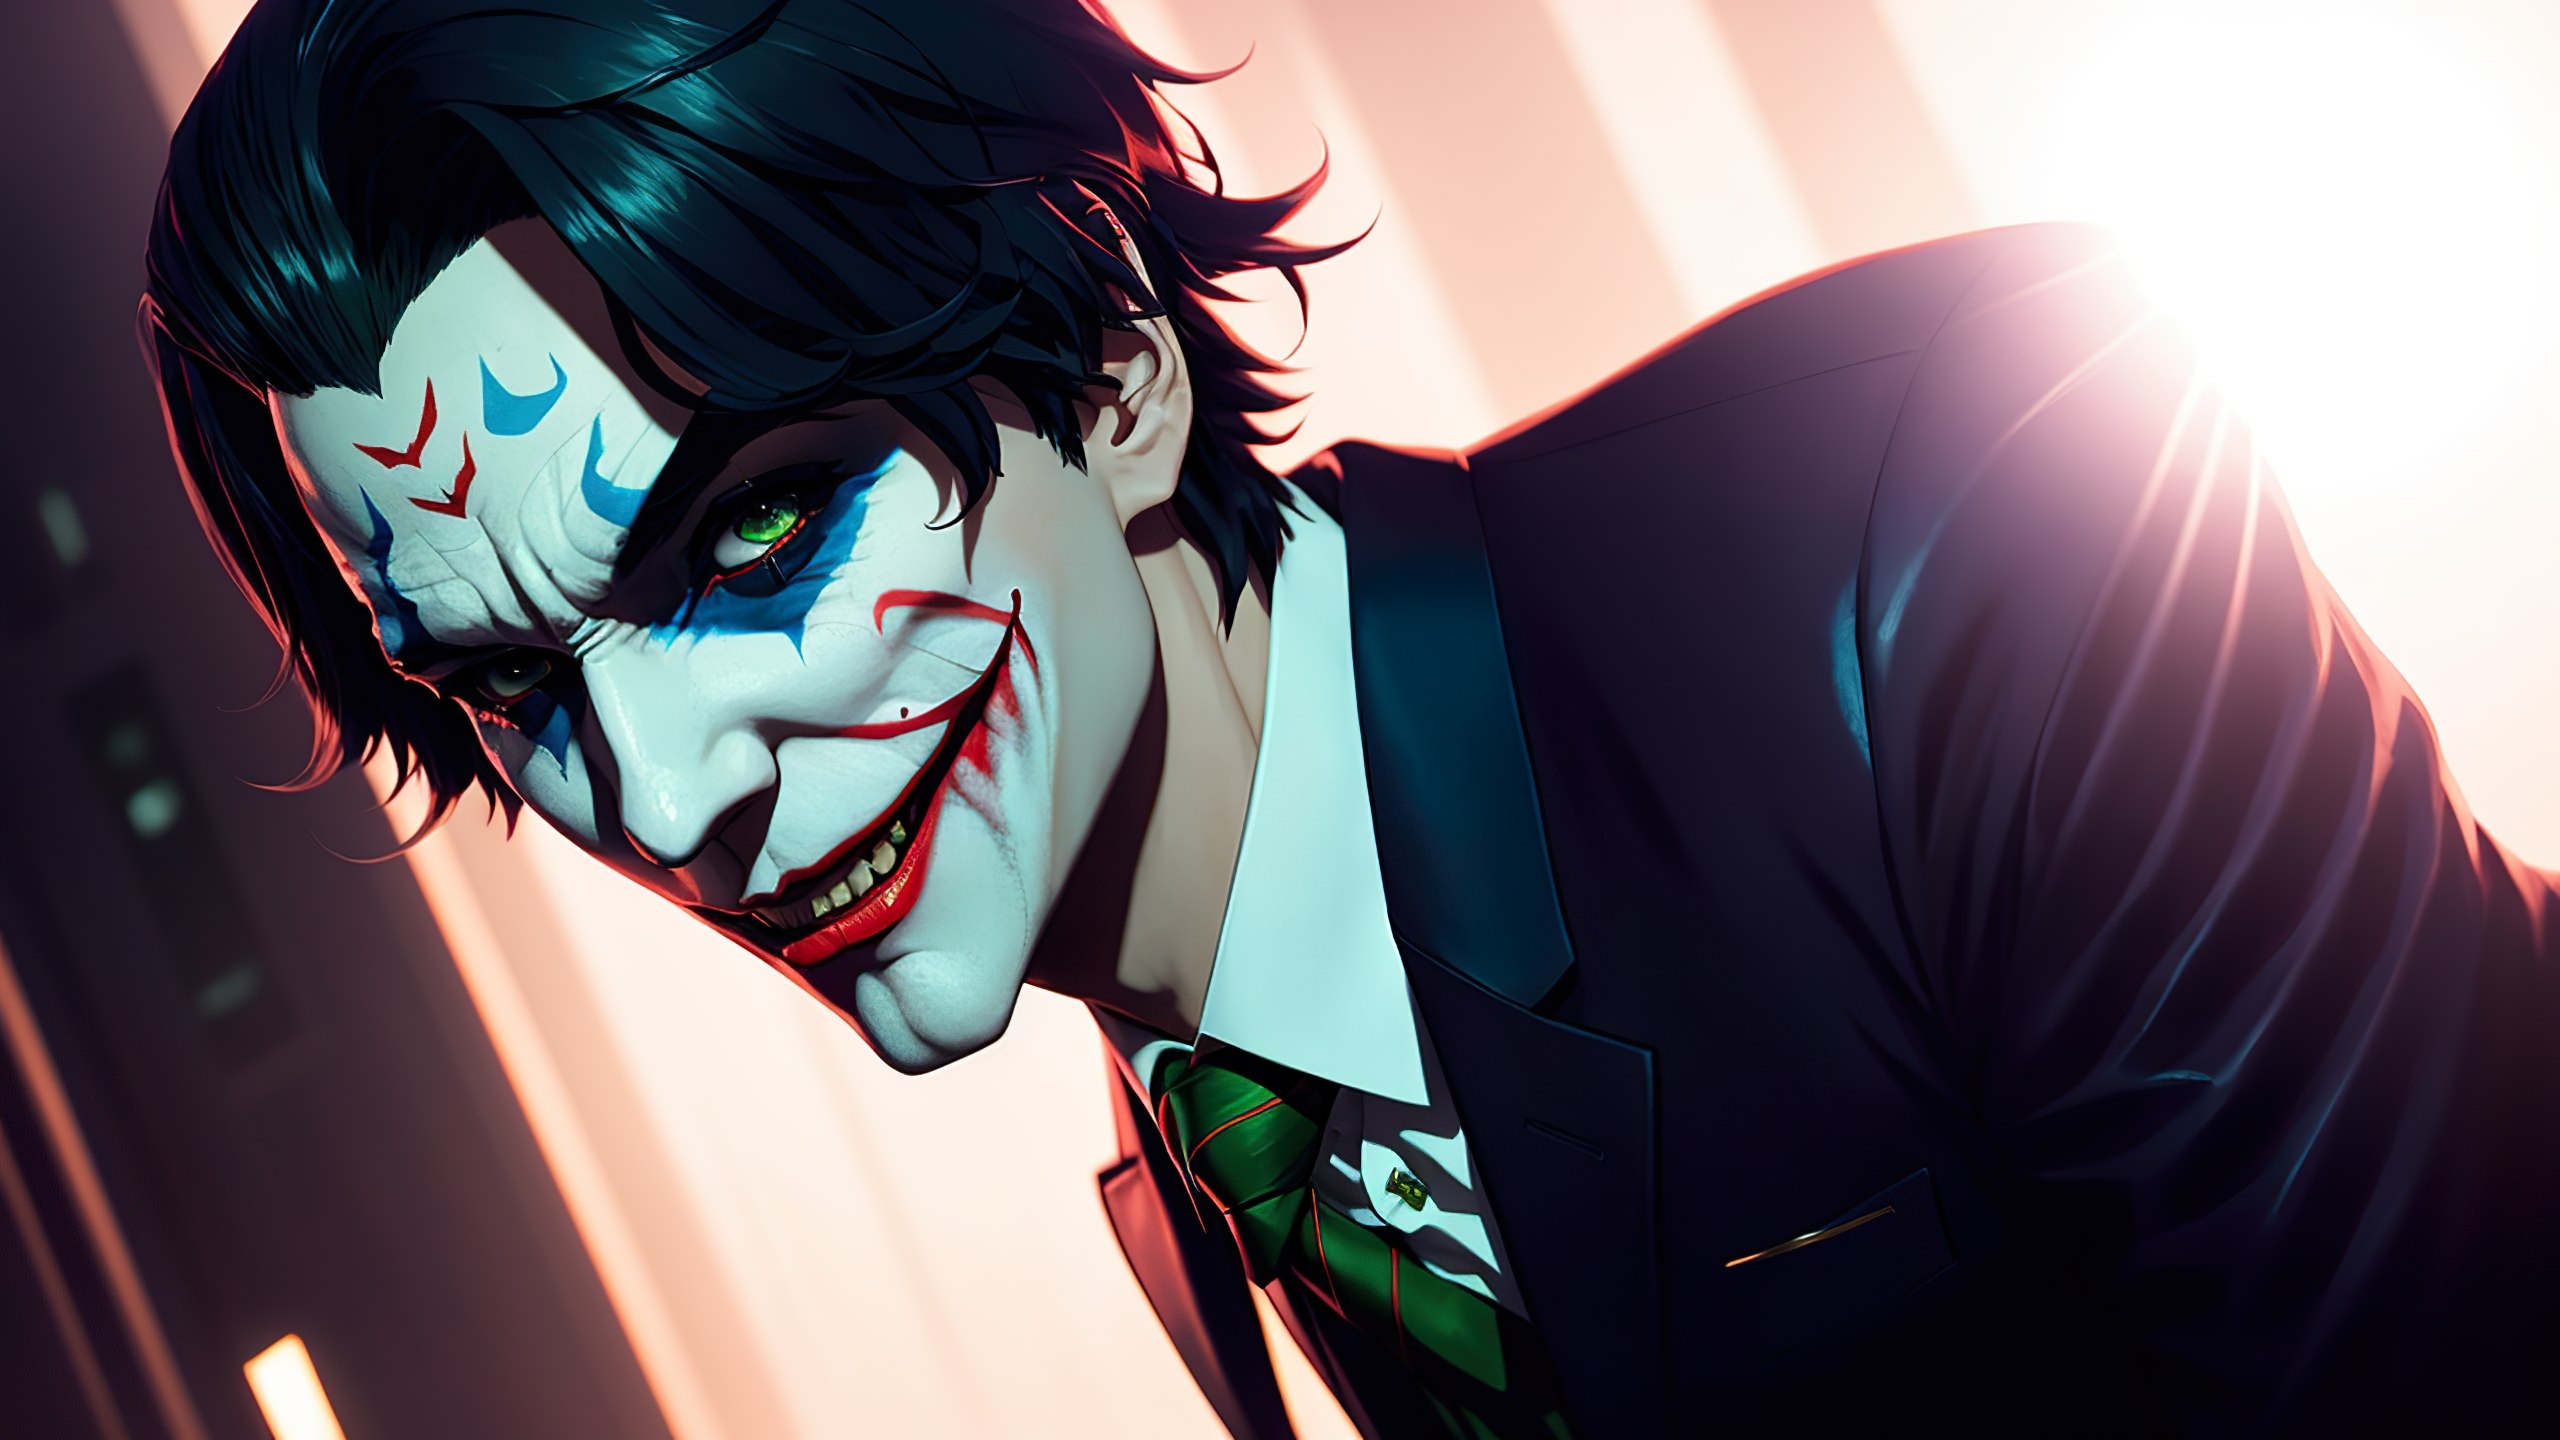 Smiling Joker Artistic 2022 Wallpaper, HD Artist 4K Wallpapers, Images,  Photos and Background - Wallpapers Den